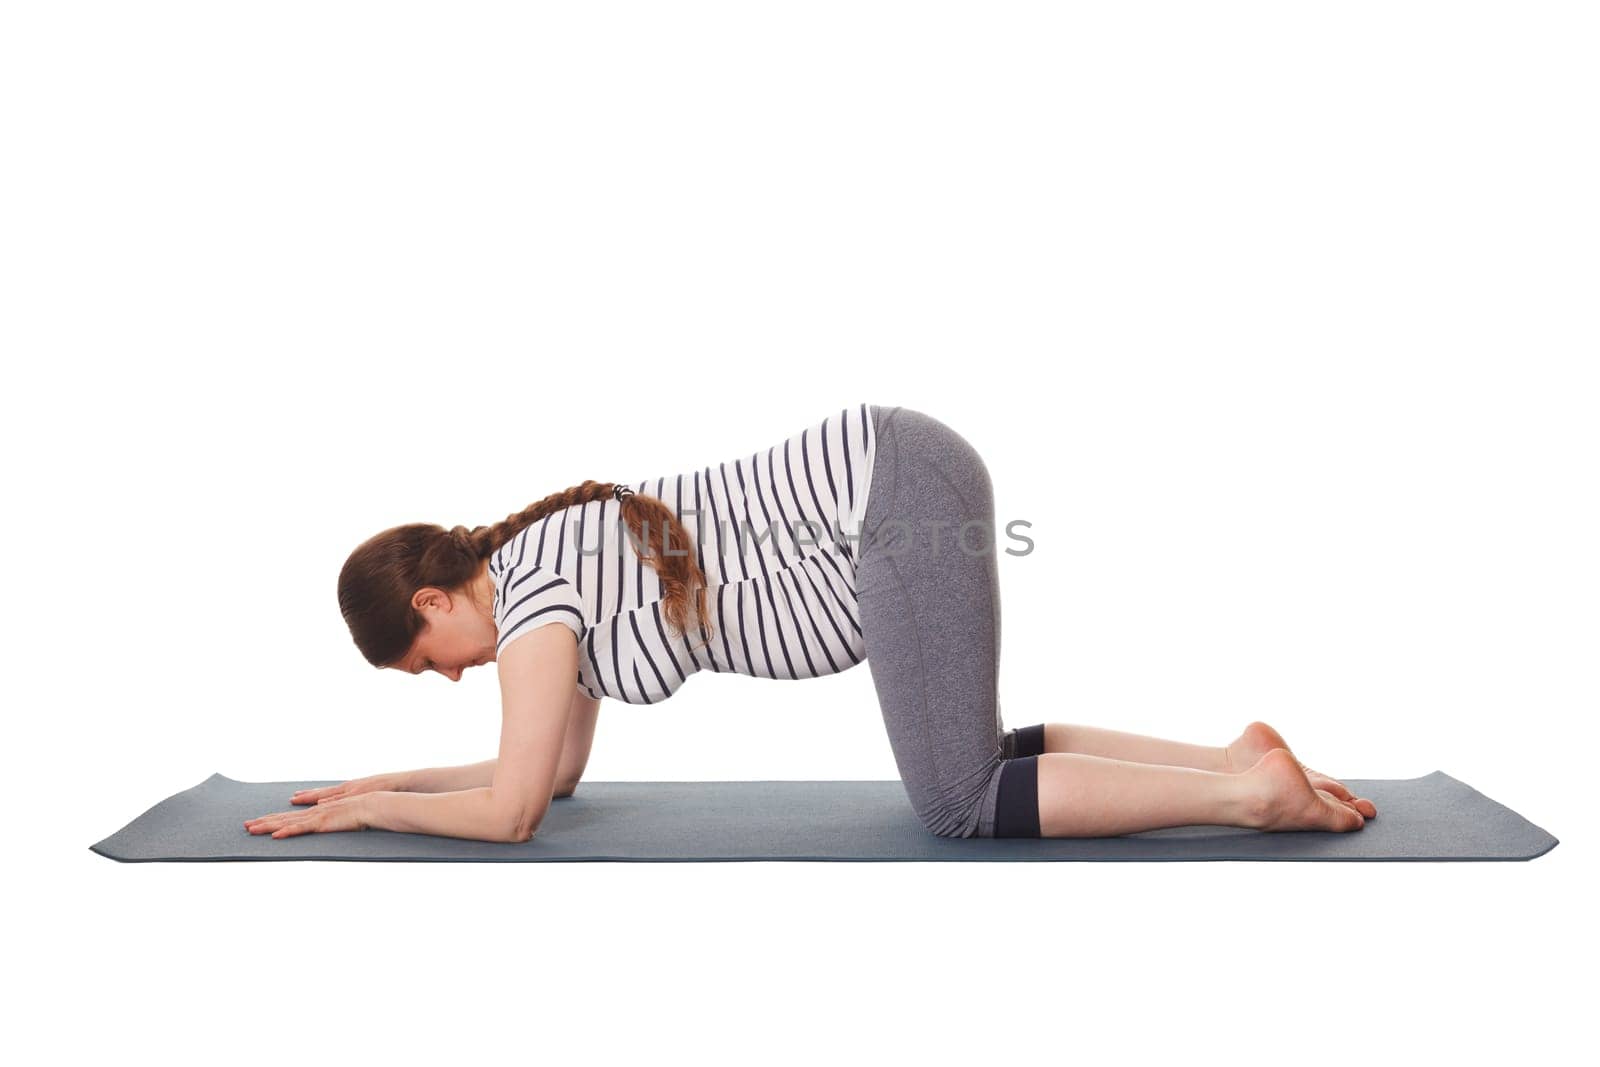 Pregnant woman doing yoga asana Balasana child pose by dimol